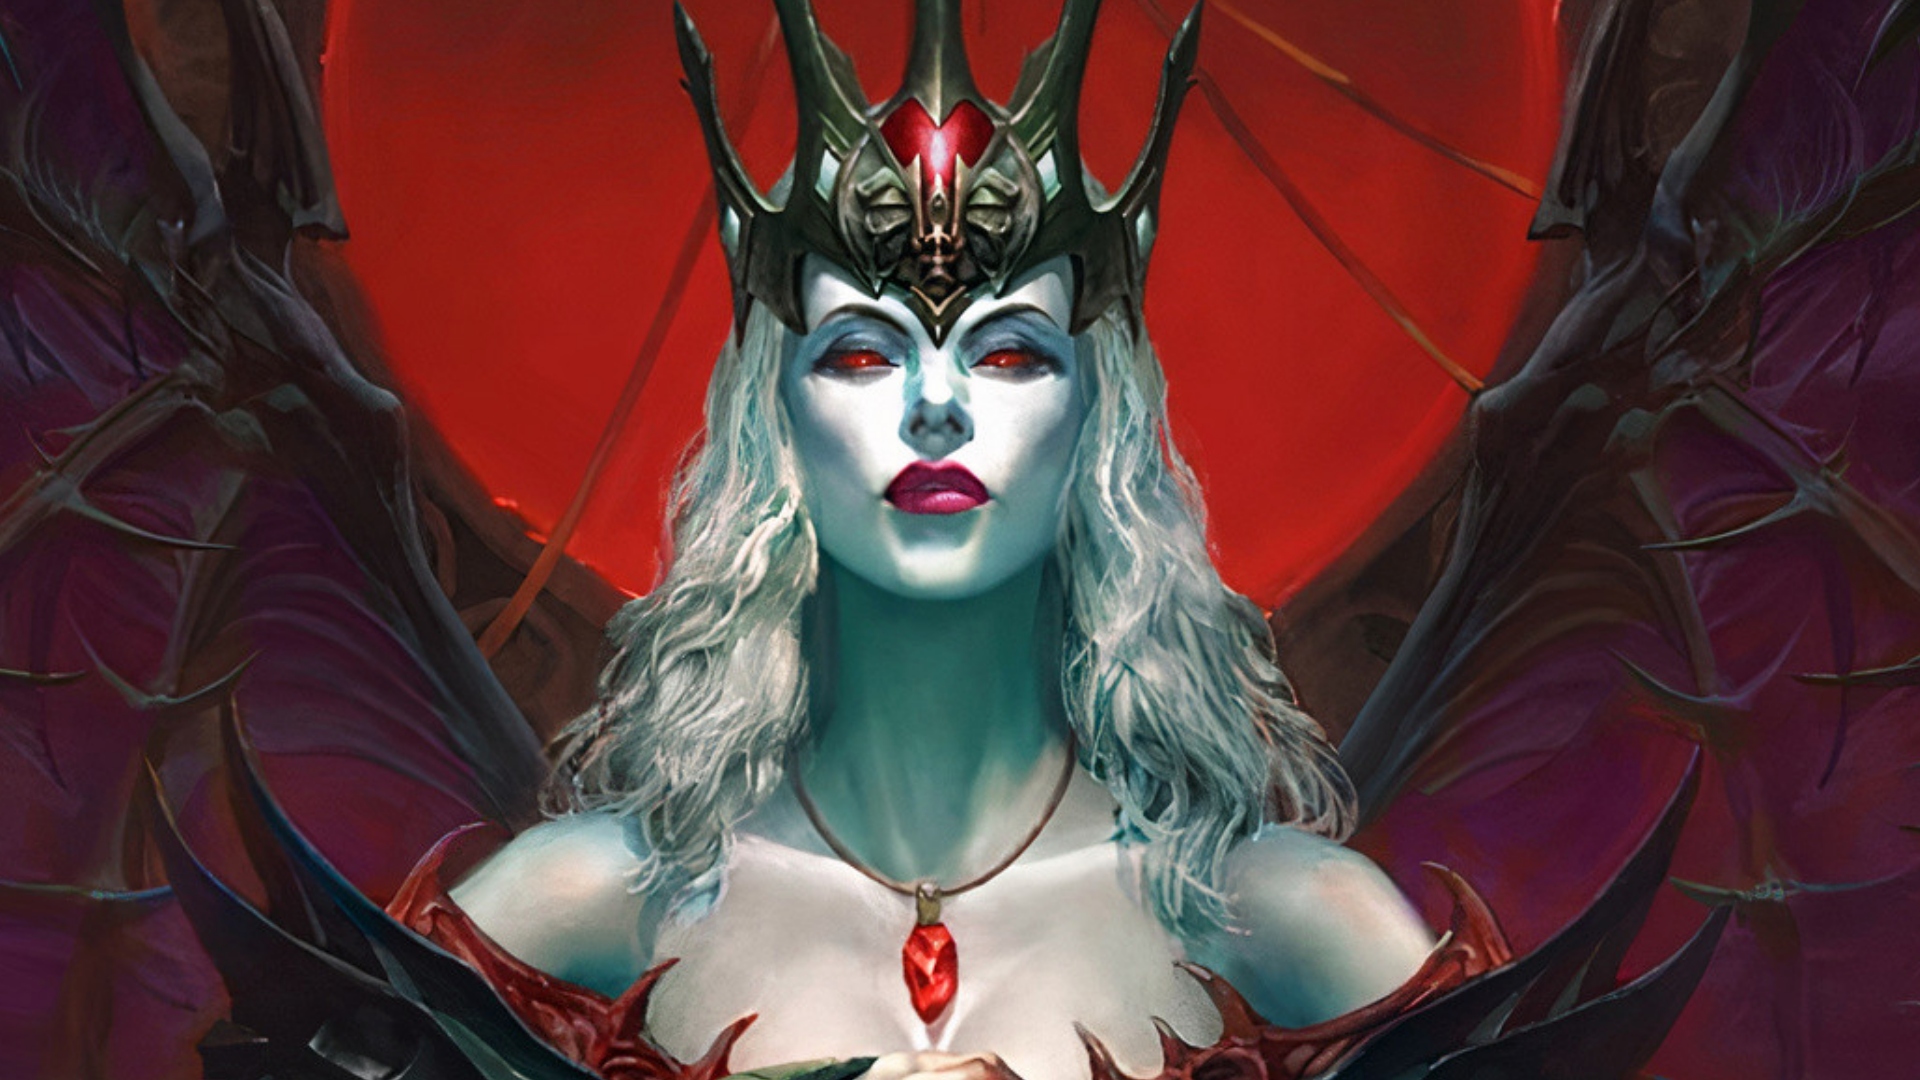 Diablo Immortal reveals Diablo as the slot machine it always was